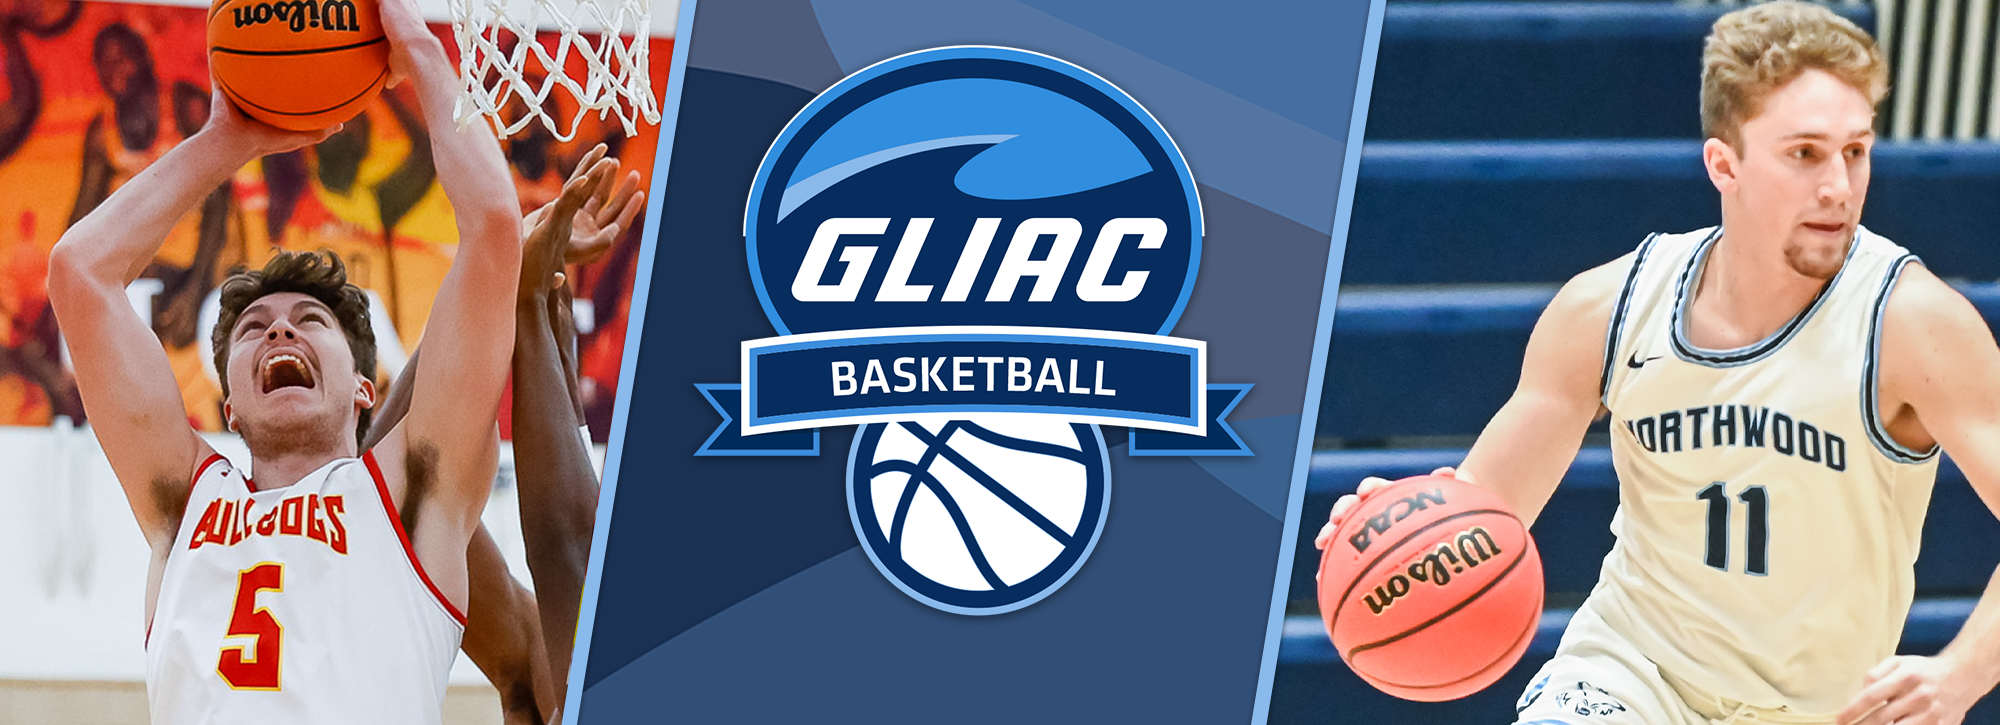 FSU's Ryan and NU's Ammerman named GLIAC Men's Basketball Players of the Week